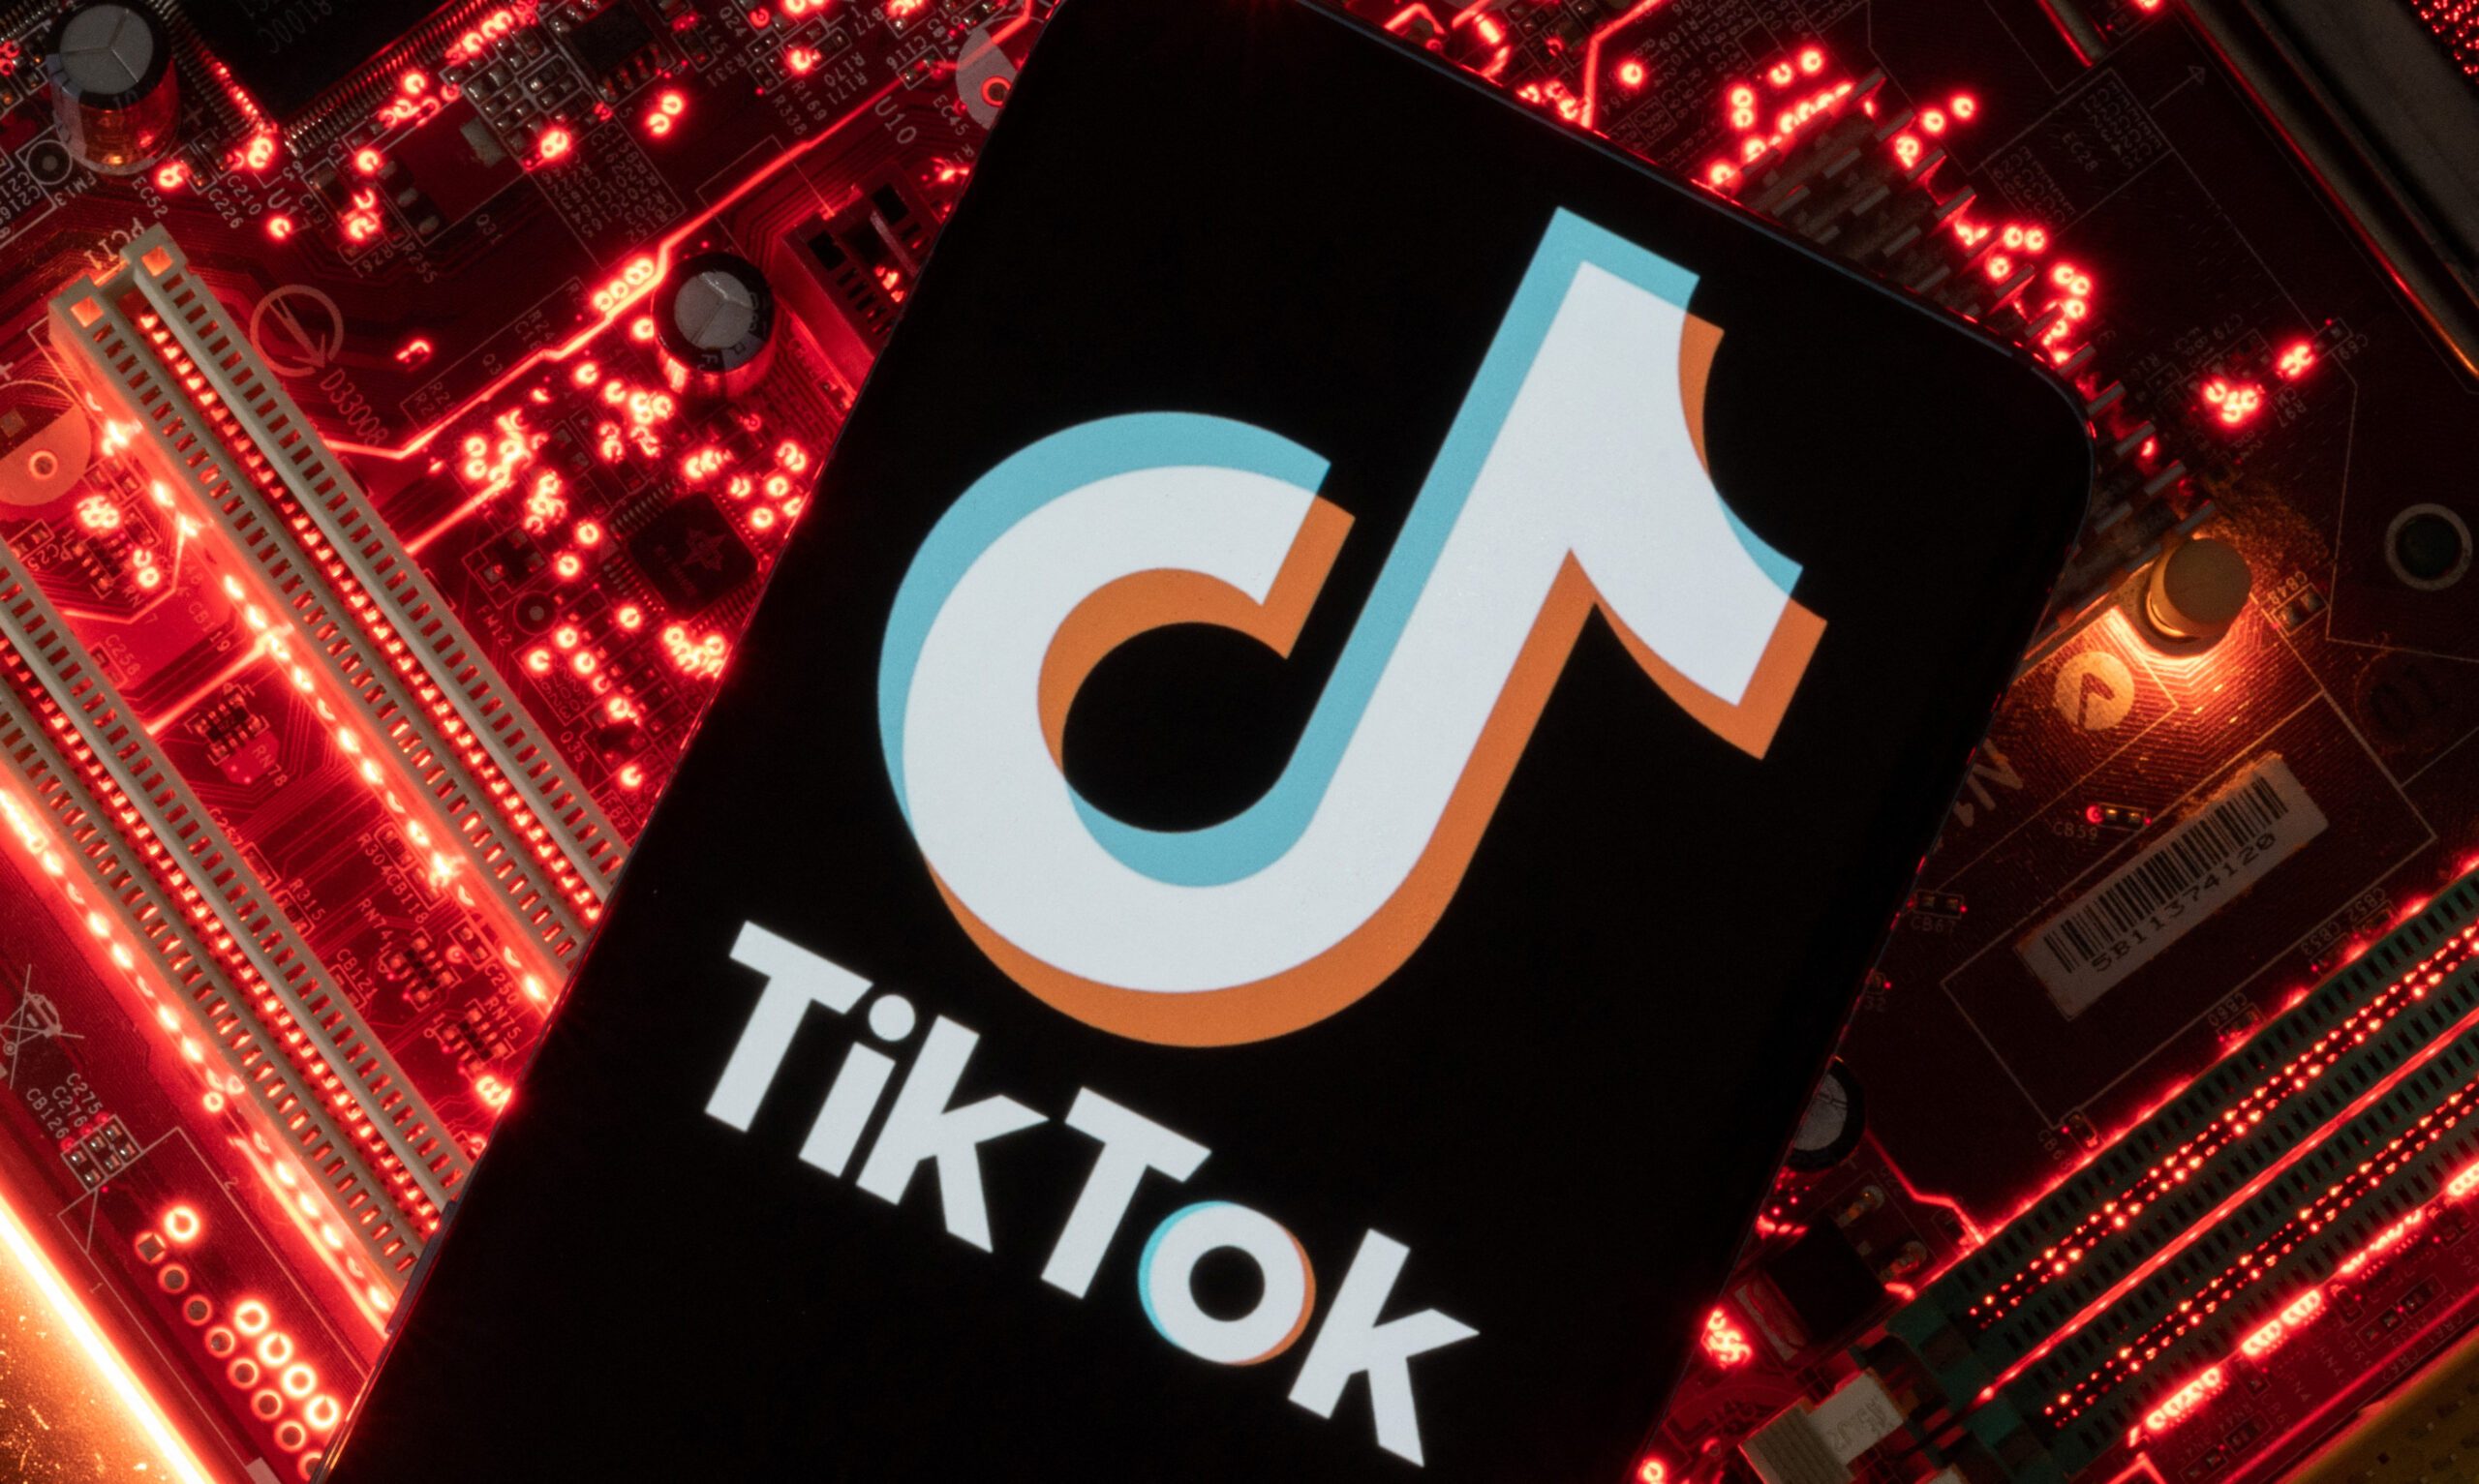 Canadian privacy regulators launch joint investigation into TikTok